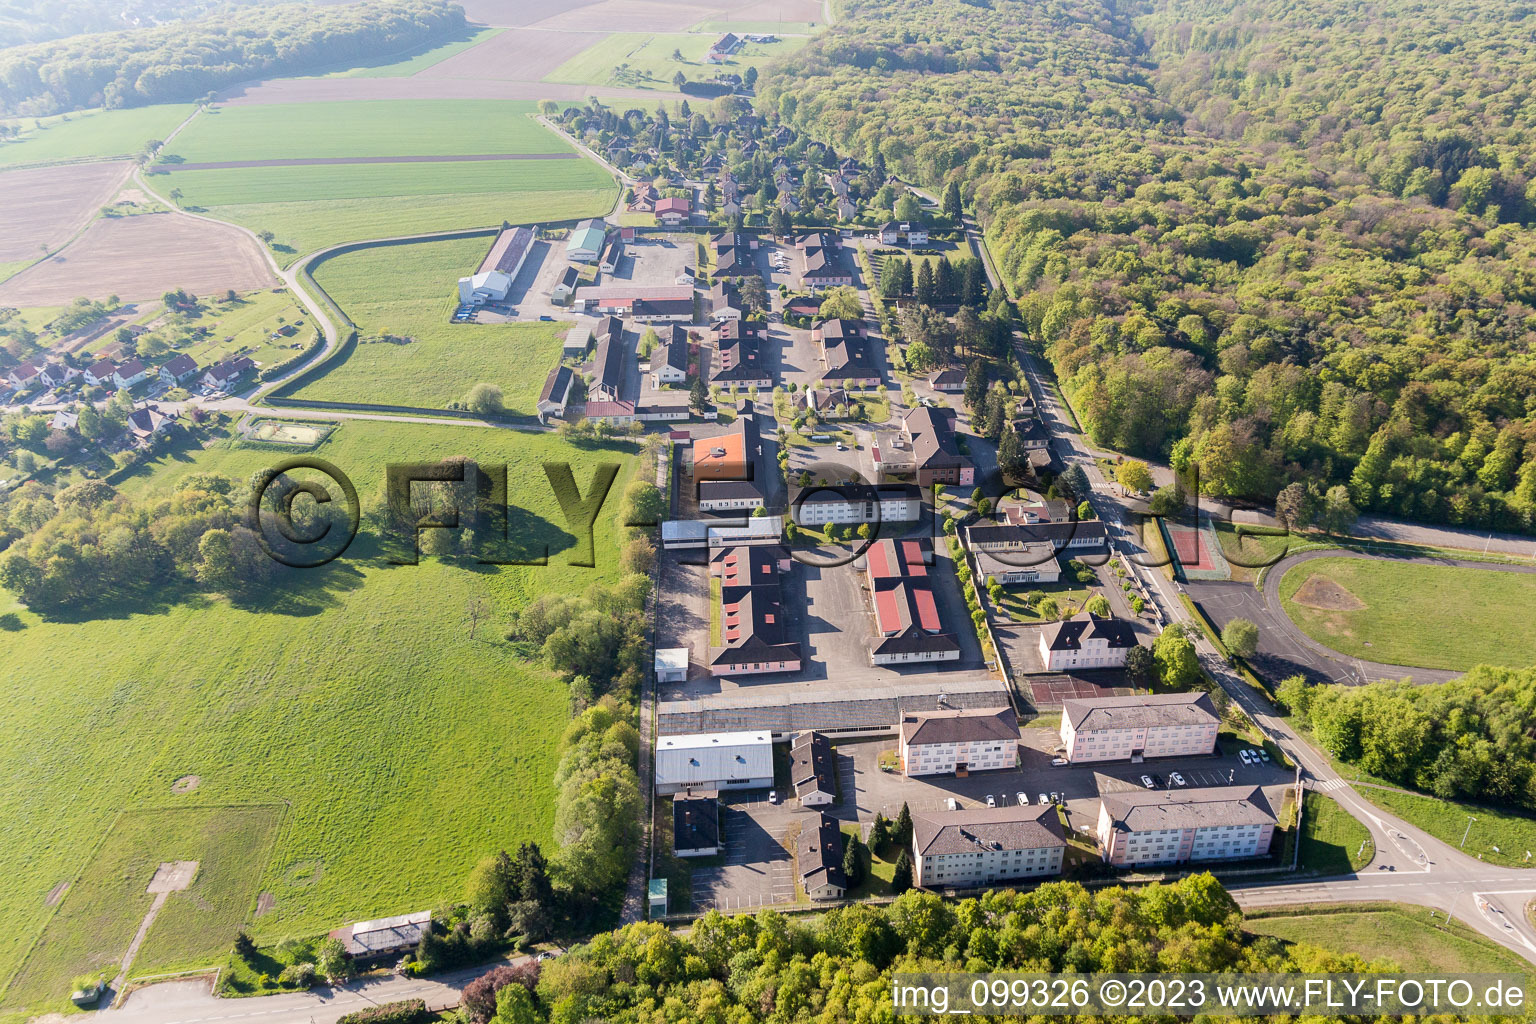 Drone recording of Drachenbronn-Birlenbach in the state Bas-Rhin, France